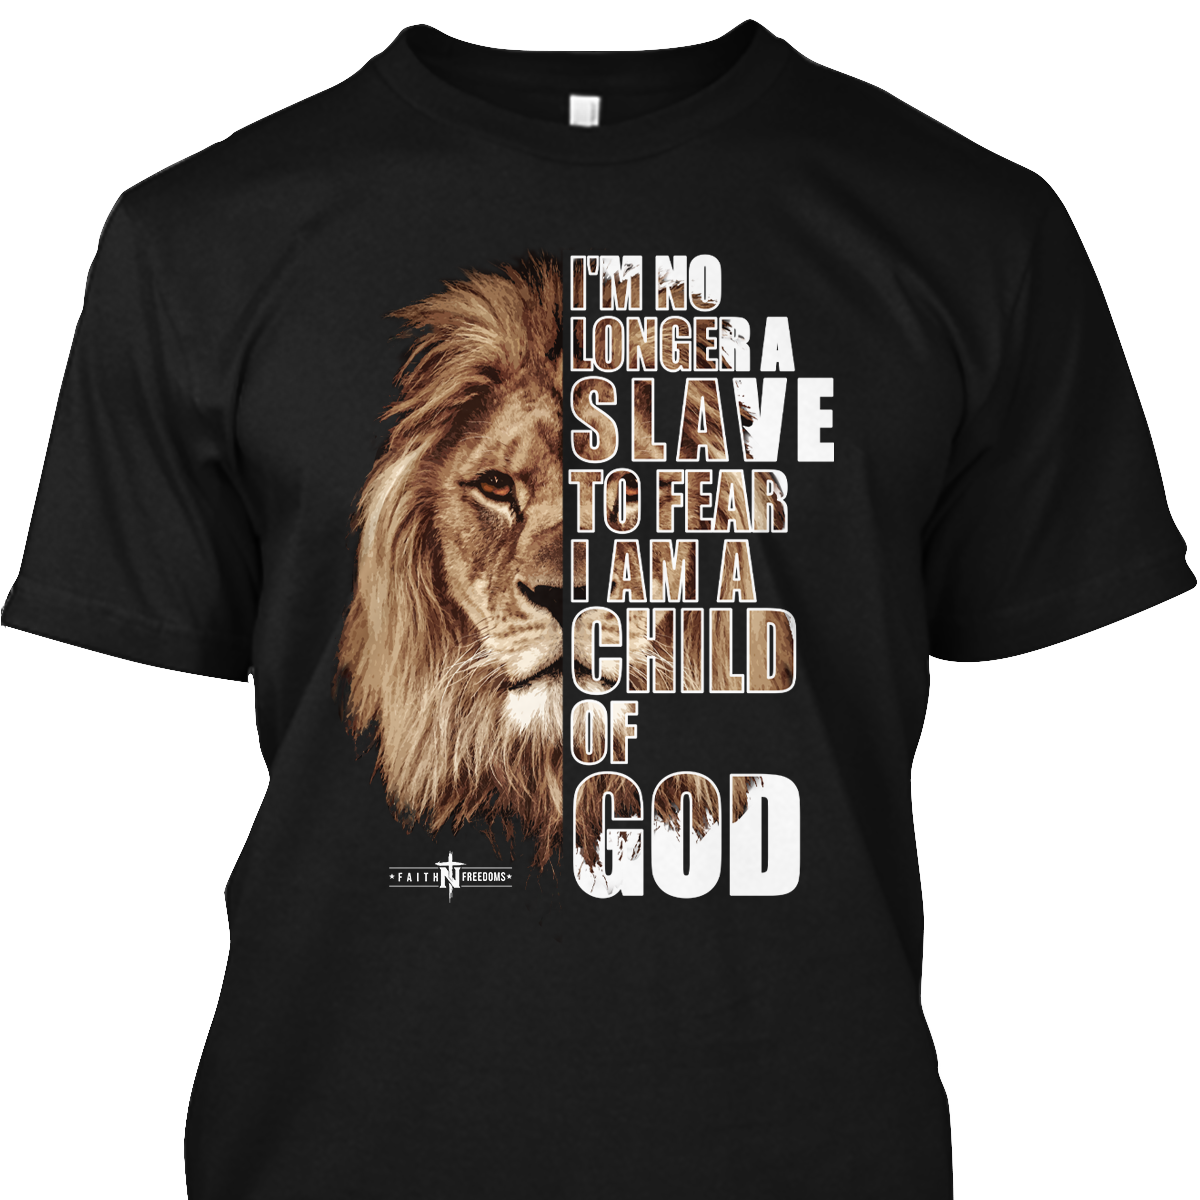 Child of God Lion T-Shirt – faithnfreedoms